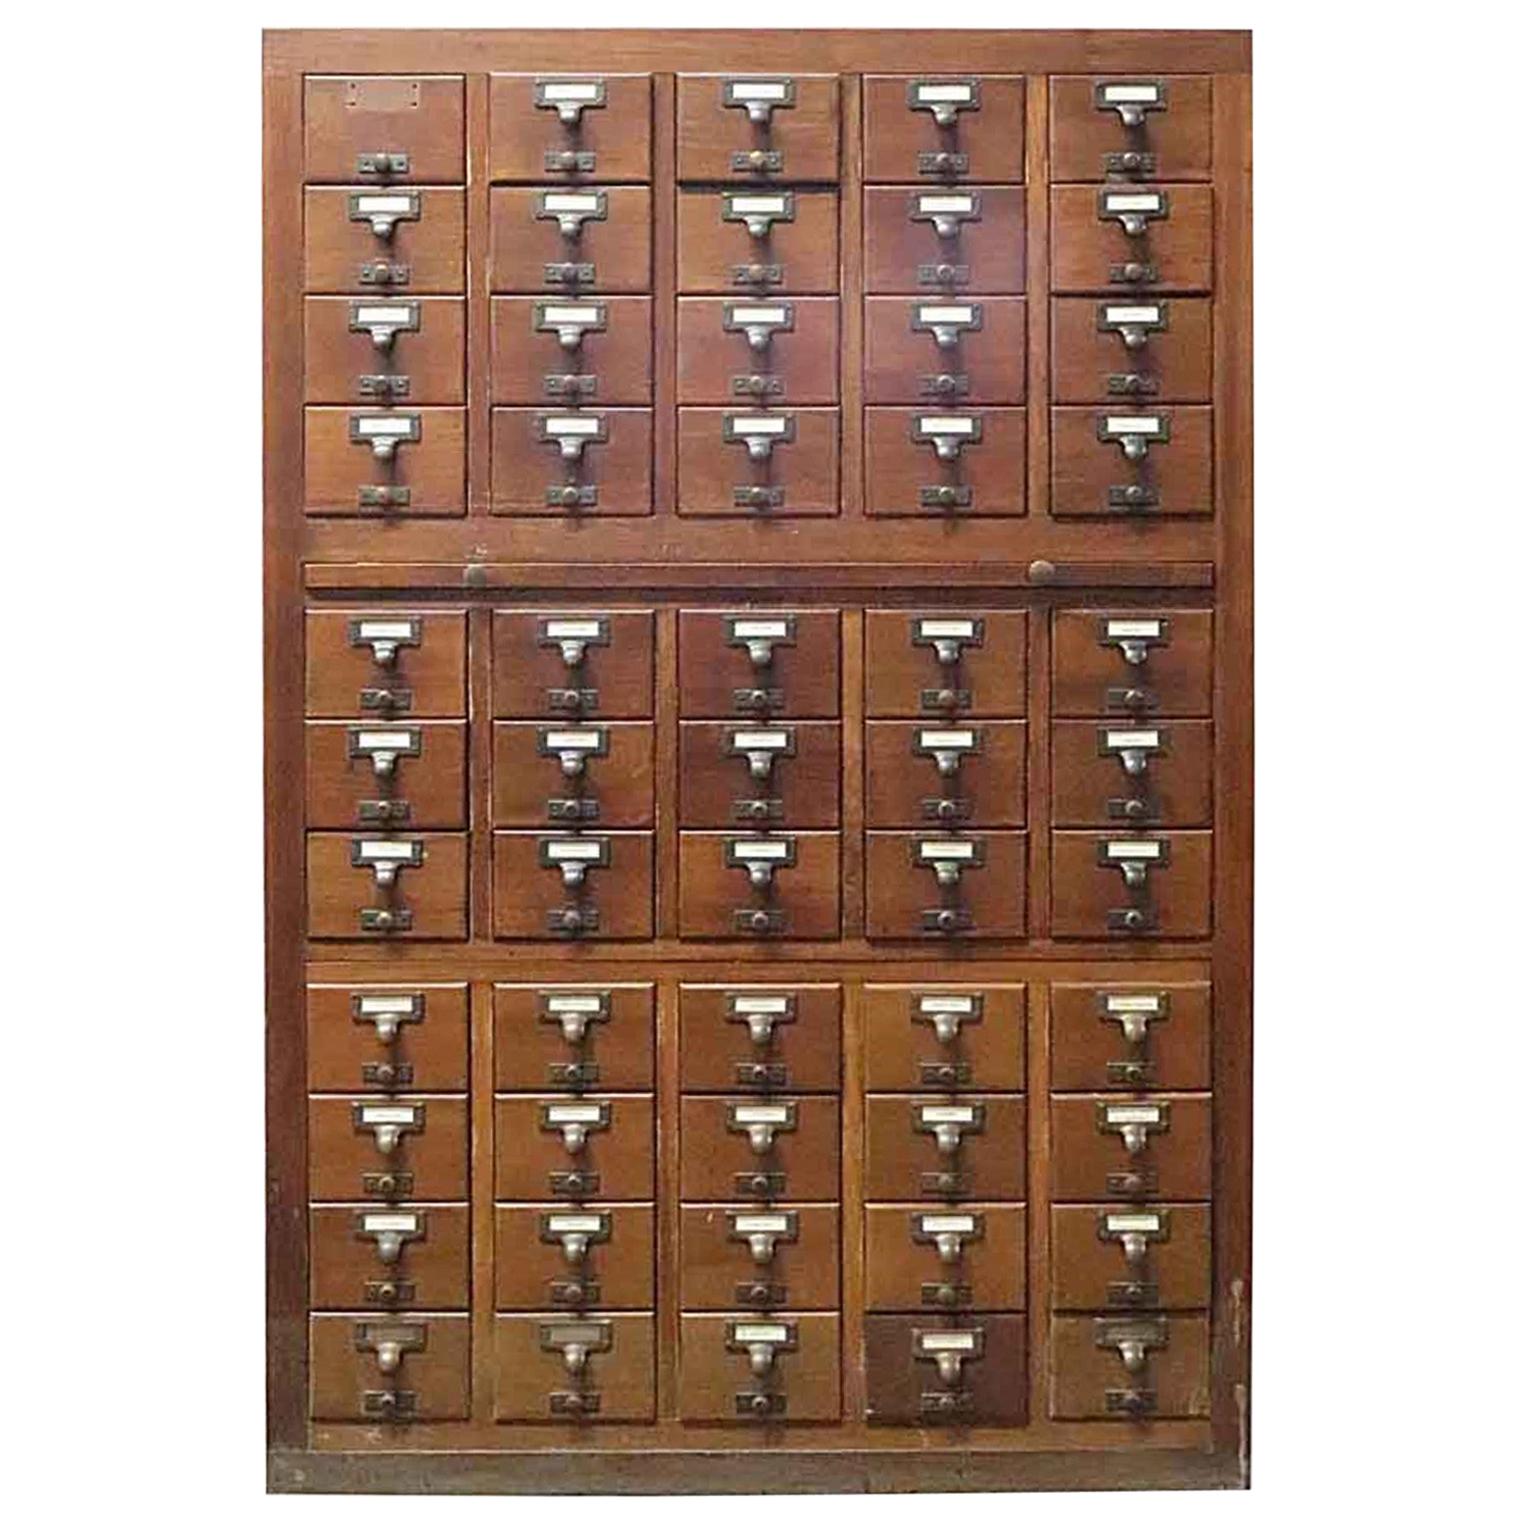 1960s 55-Drawer Dark Mahogany Stain Library Card Catalog Cabinet